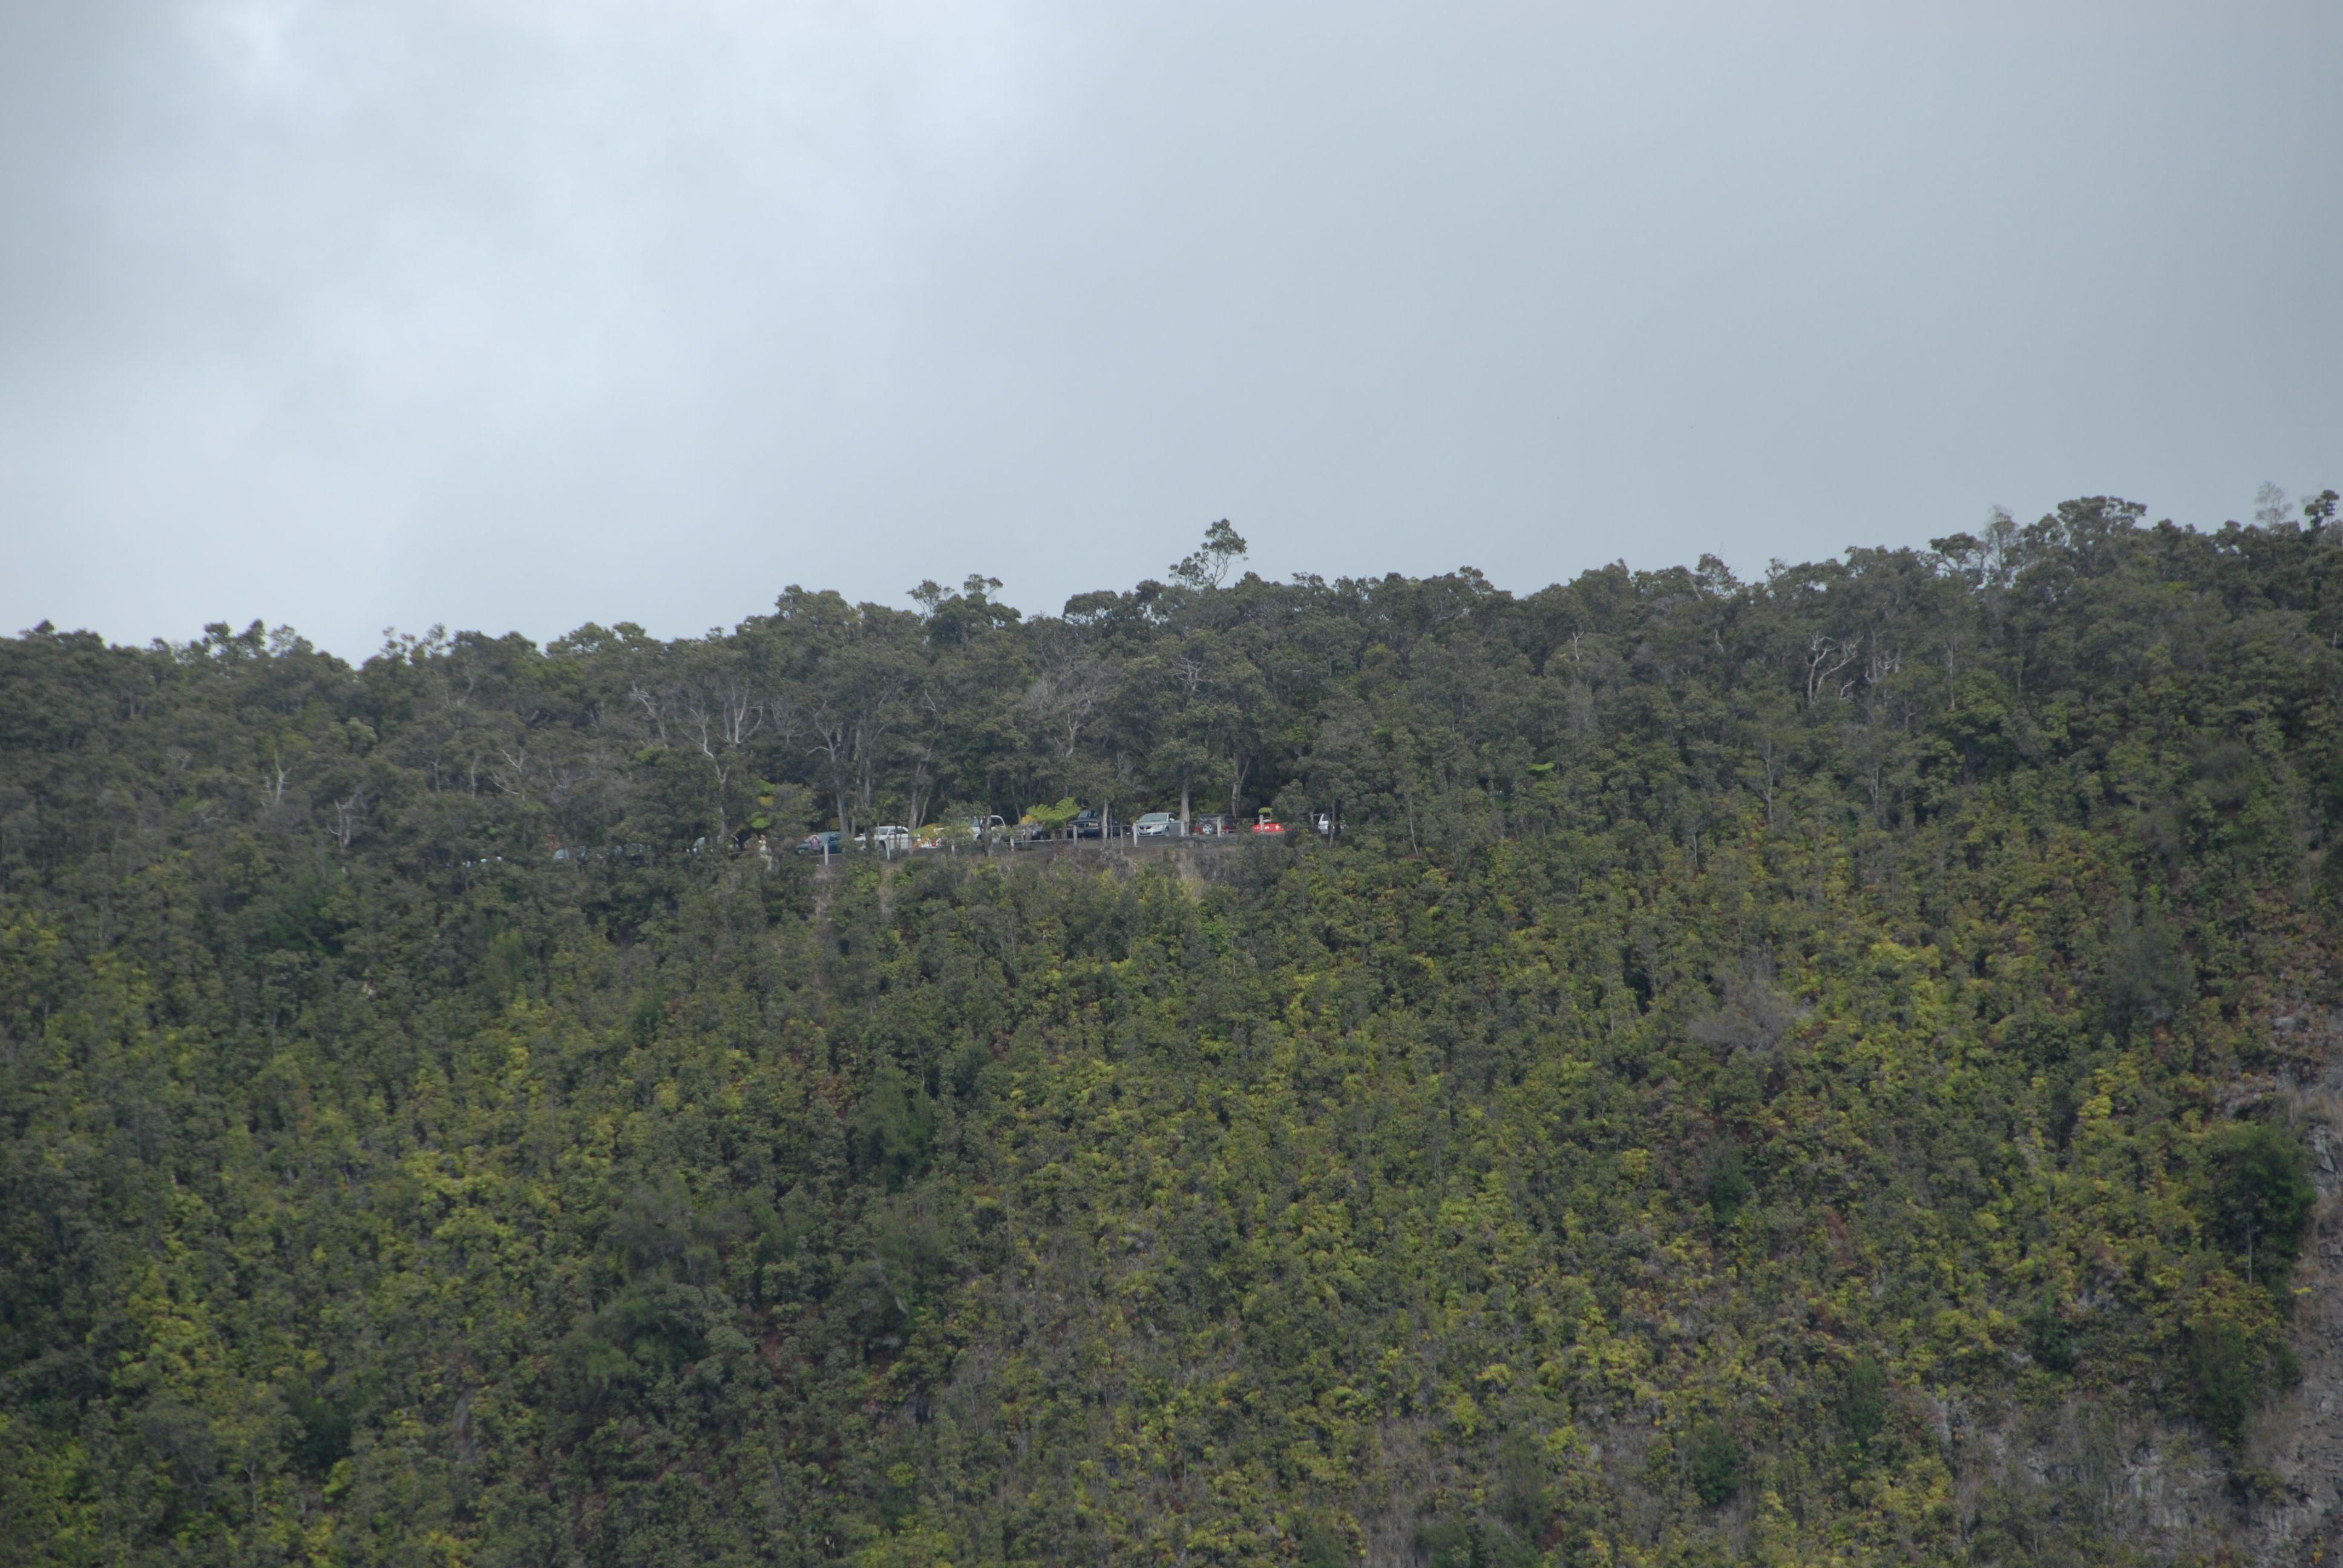 Kīlauea Iki Parking Lot Viewed From Crater